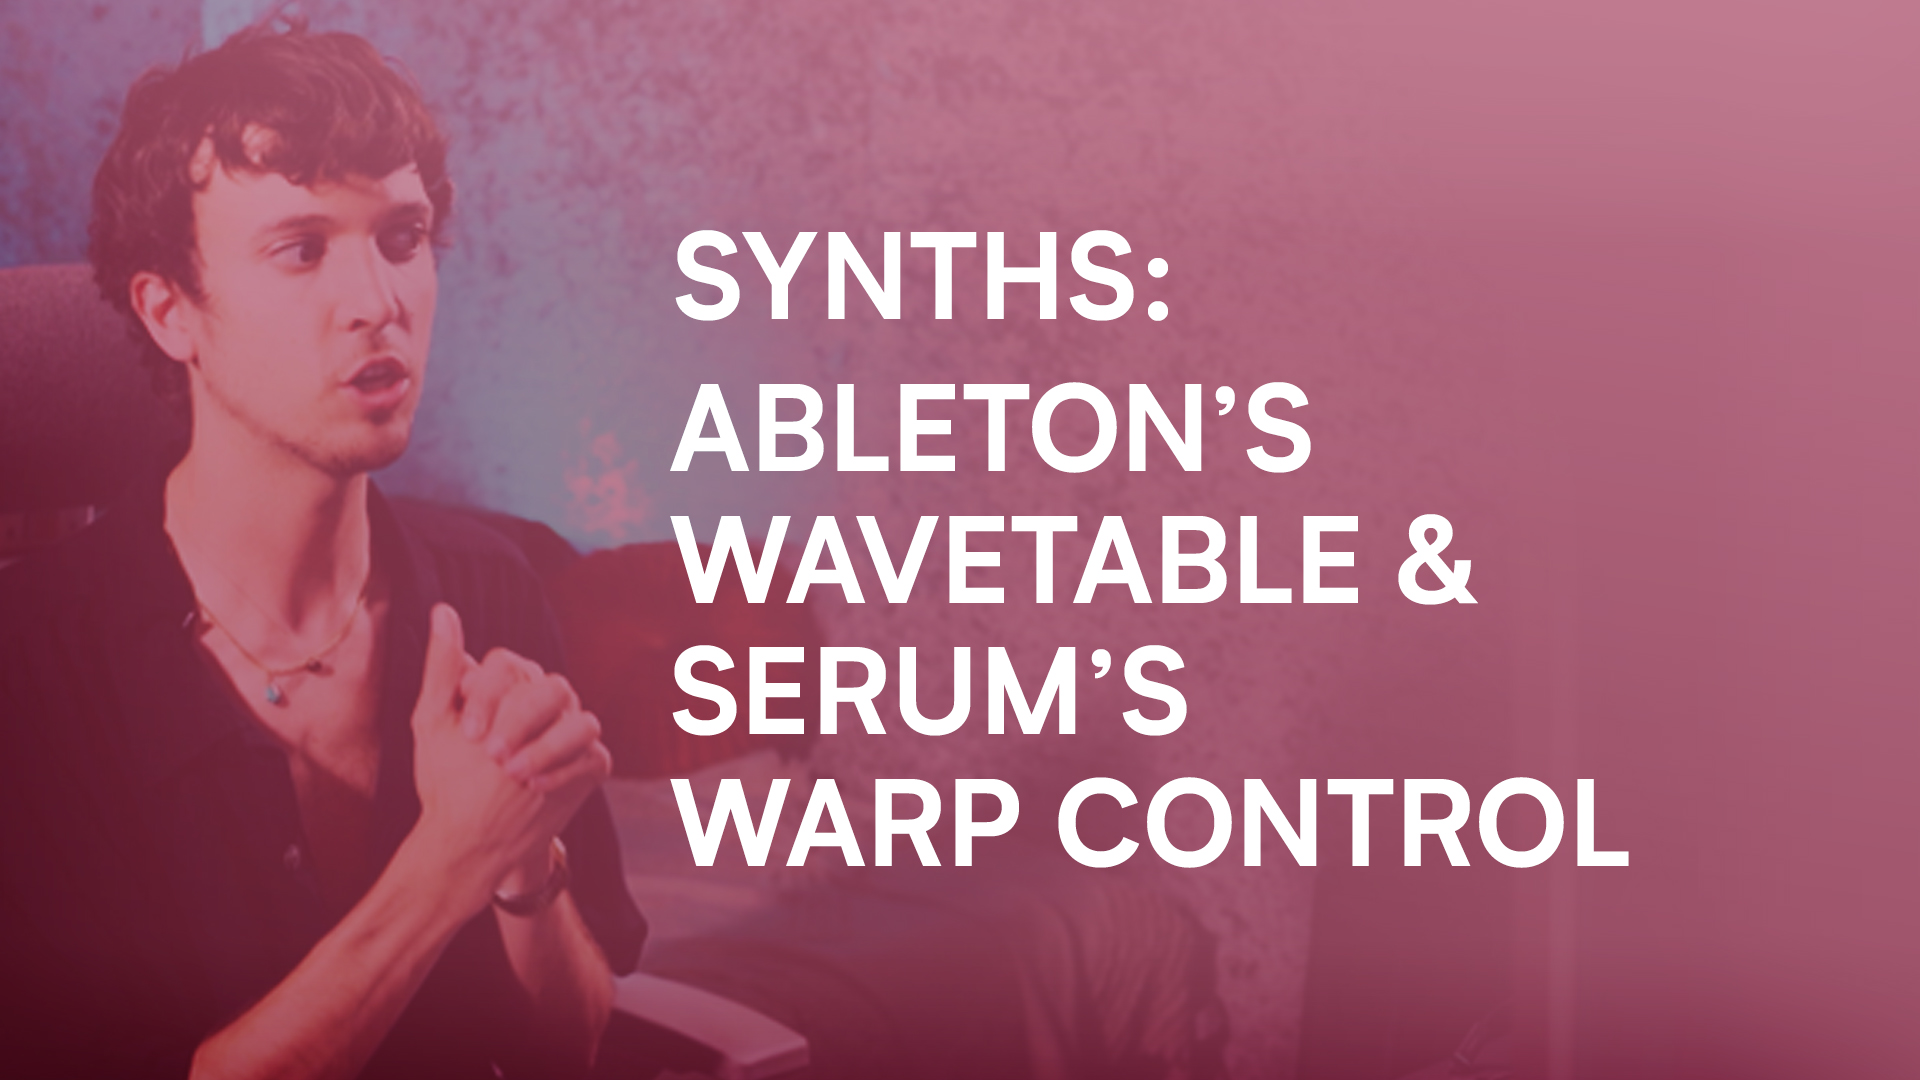 ABLETON'S WAVETABLE & SERUM'S WARP CONTROL